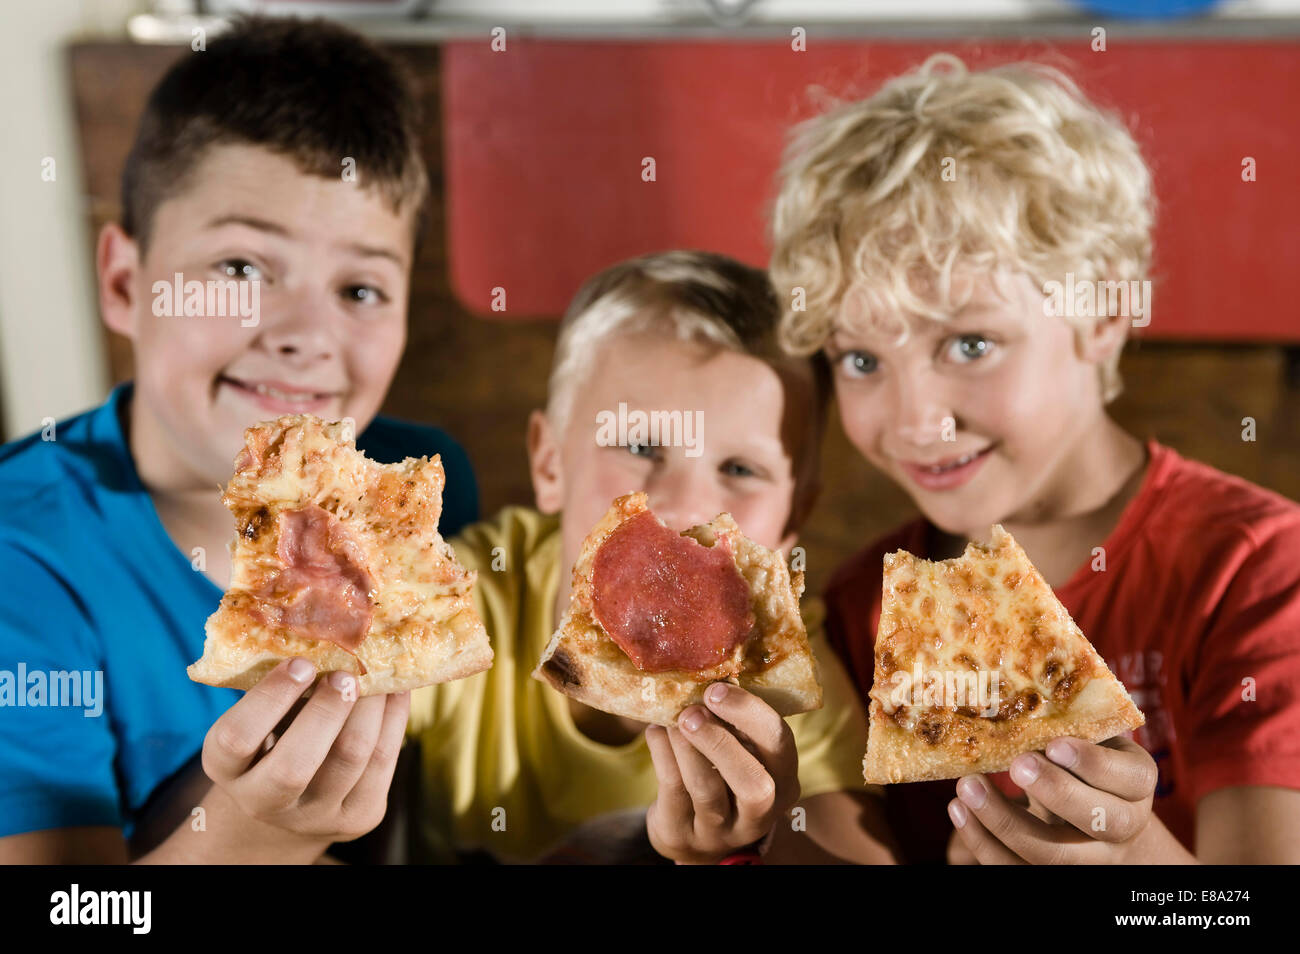 Three boys holding slices of pizza Stock Photo